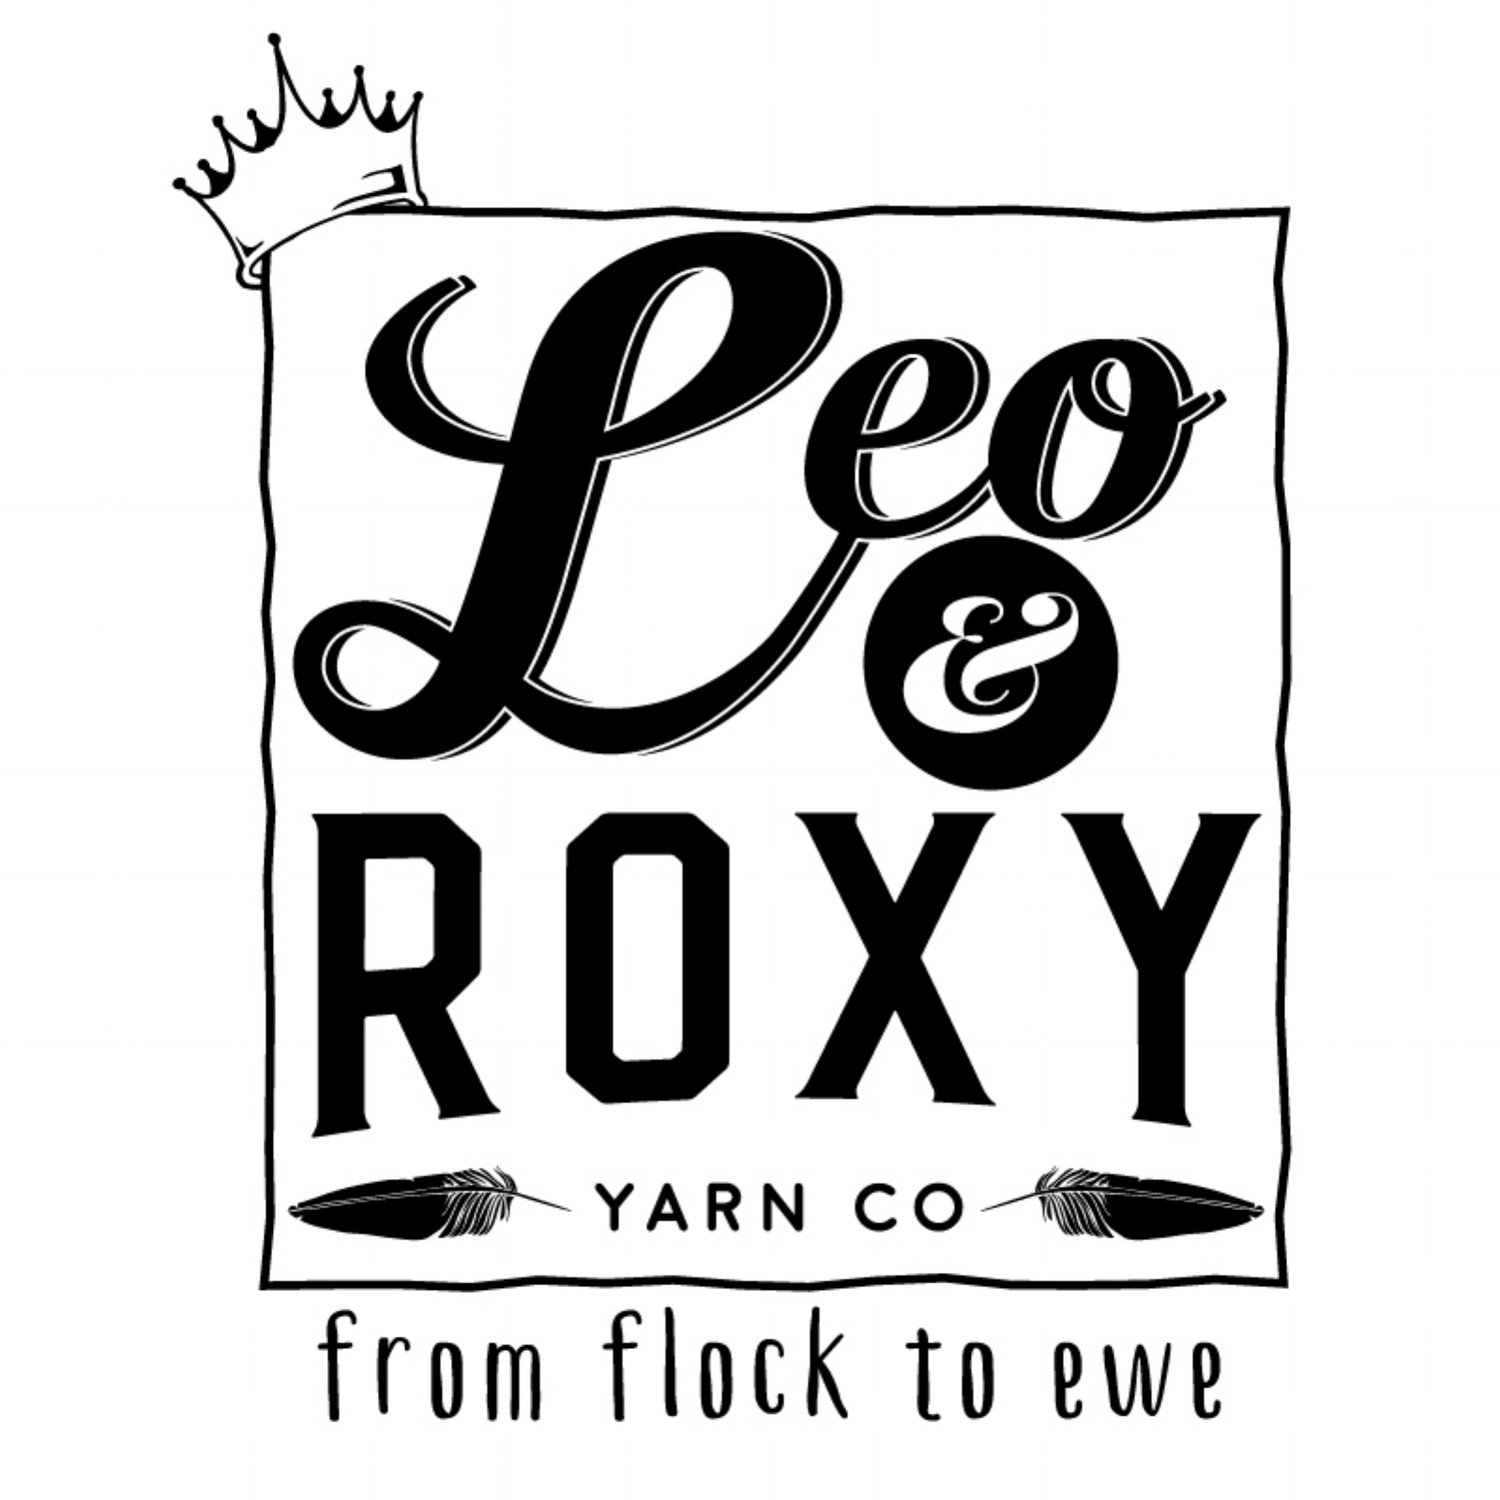 Leo and Roxy Yarn Co.